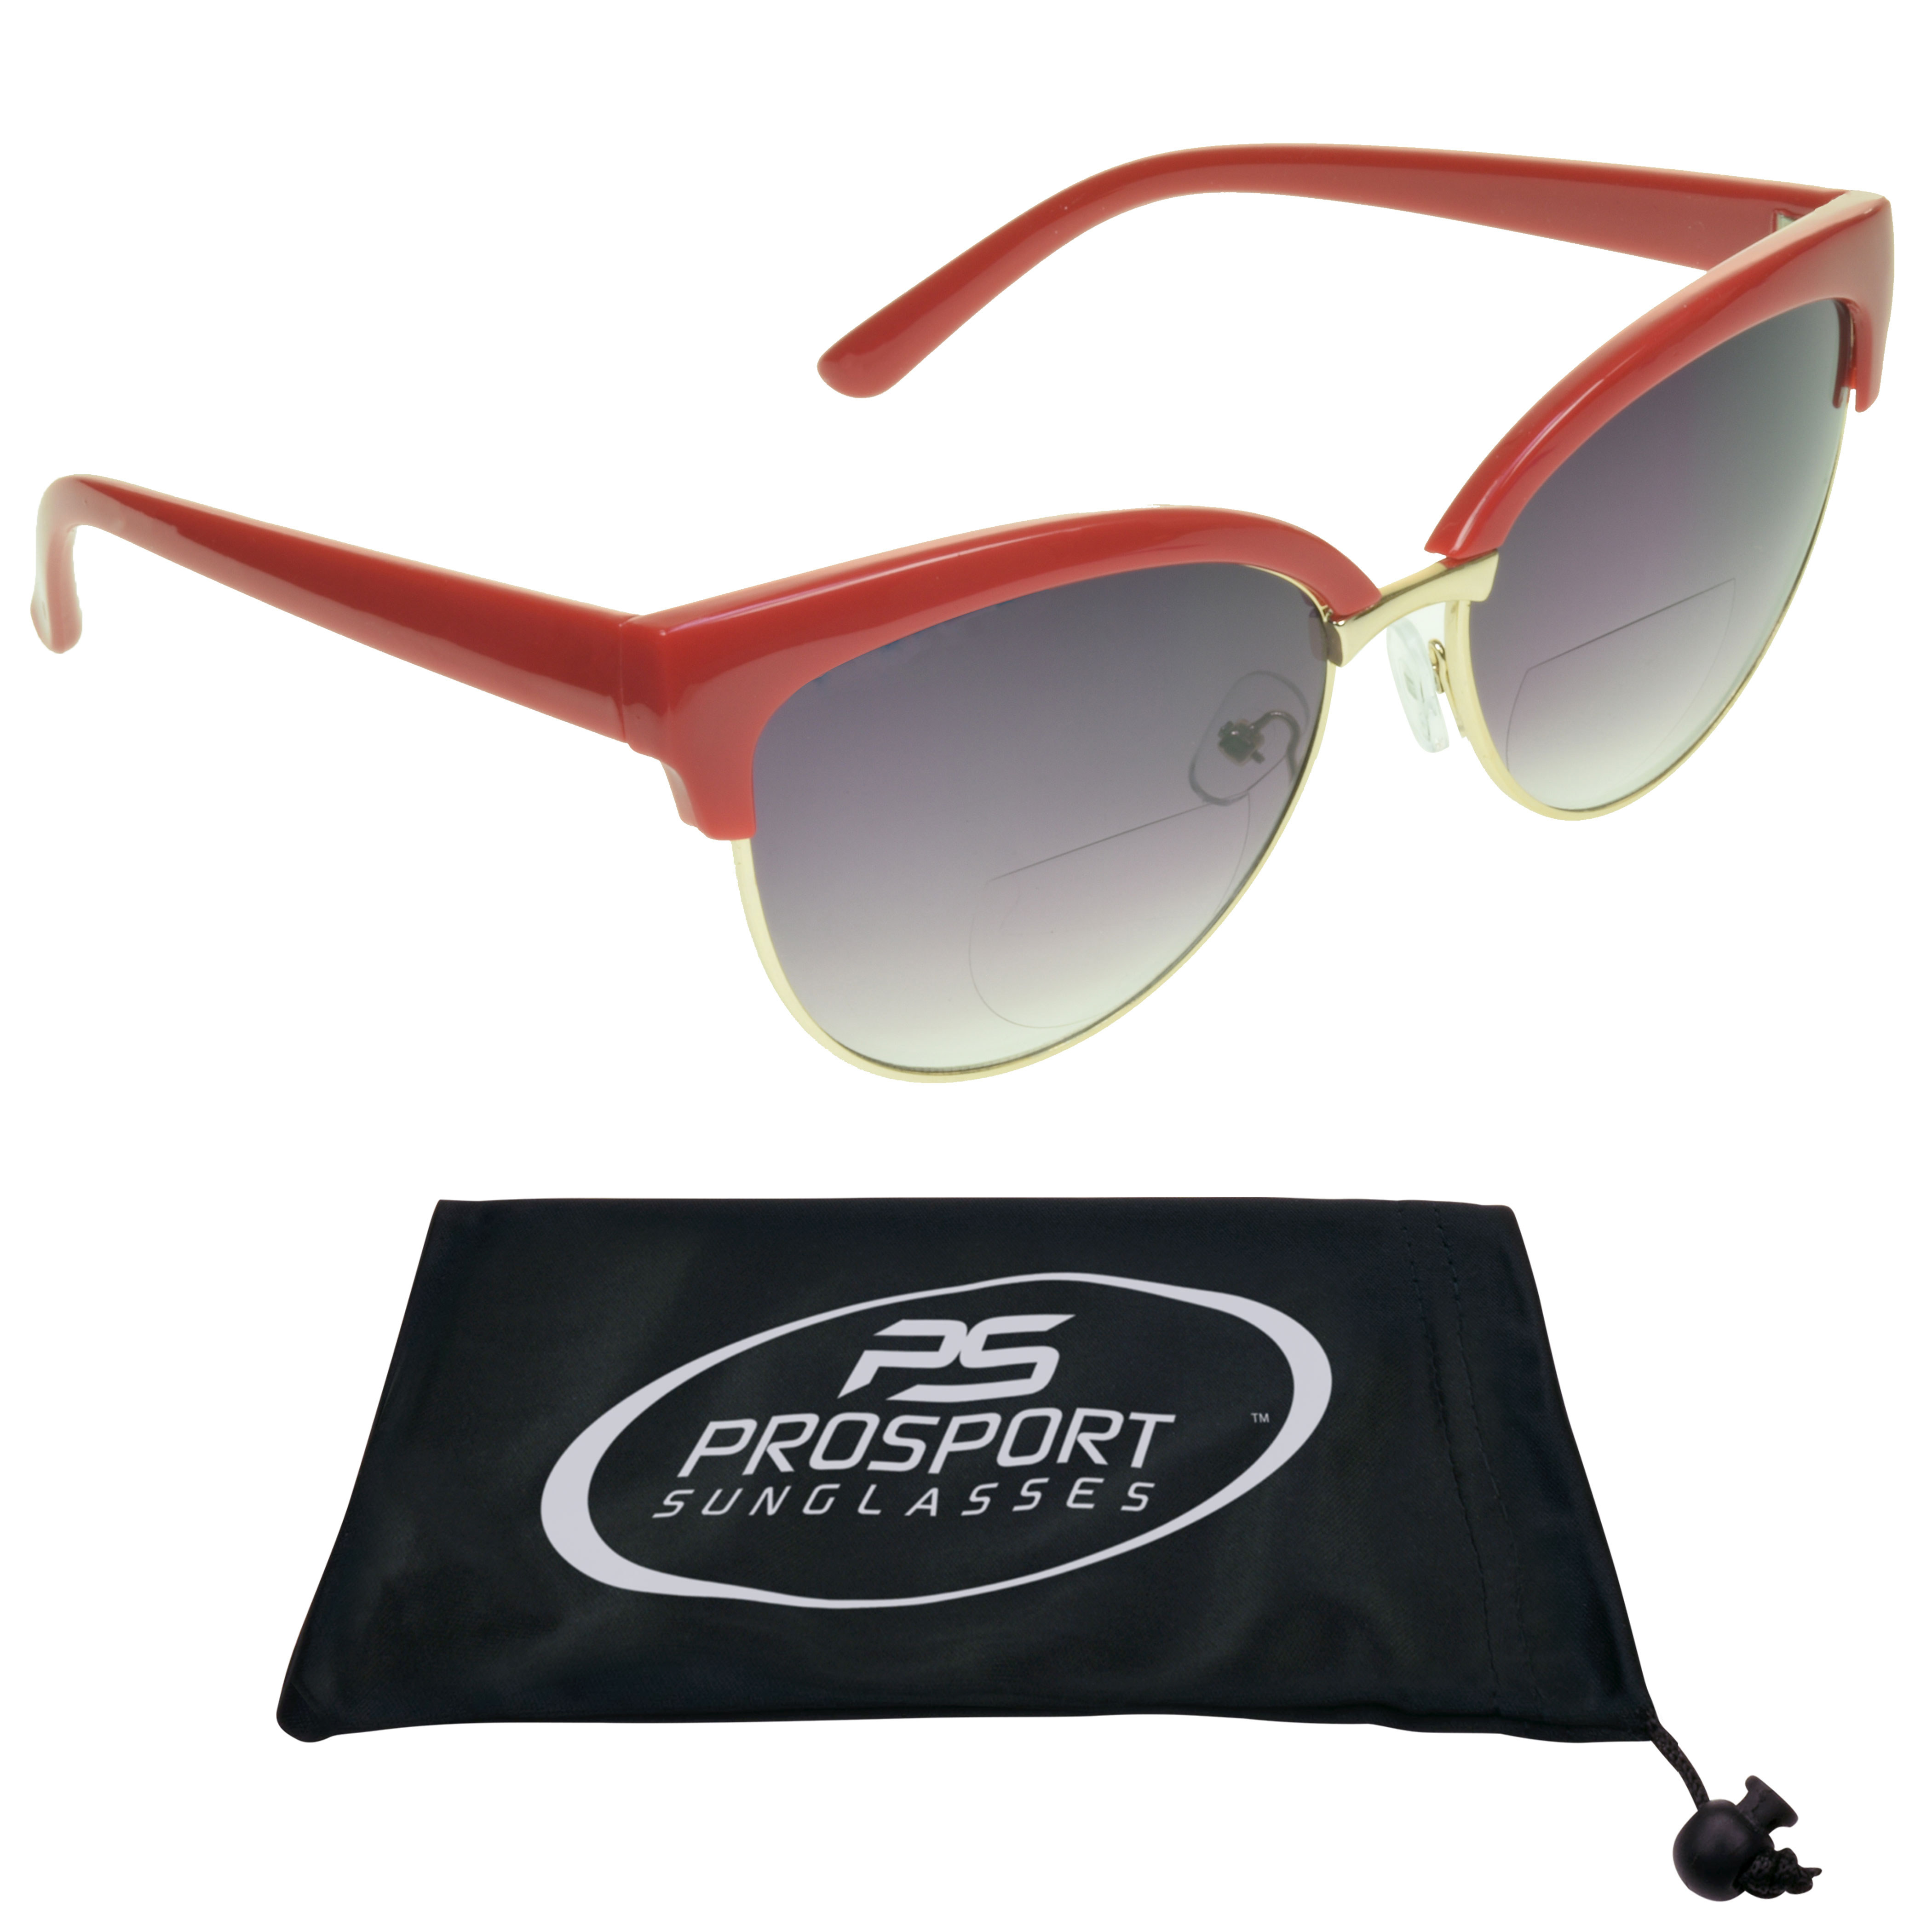 proSPORT Women Bifocal Reading Cateye Fashion Horn Rim Sunglasses Red Gold Frame Smoke Lens +3.00 - image 1 of 5